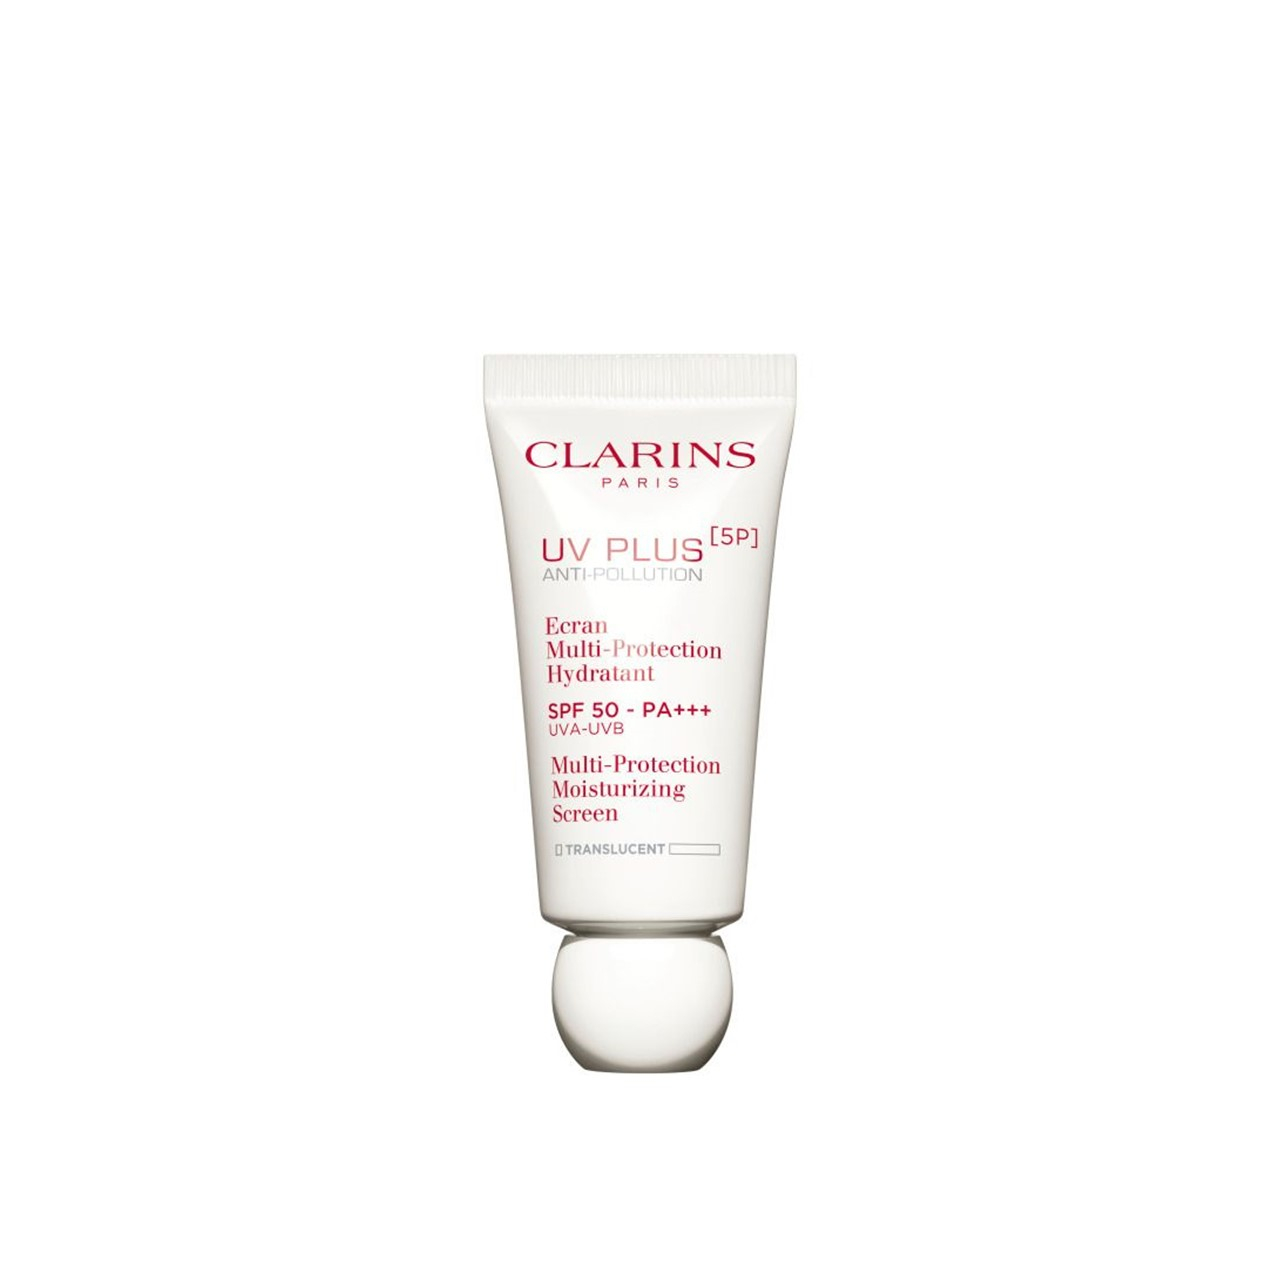 Clarins UV Plus [5P] Anti-Pollution SPF50 Translucent 30ml (1.01fl oz)